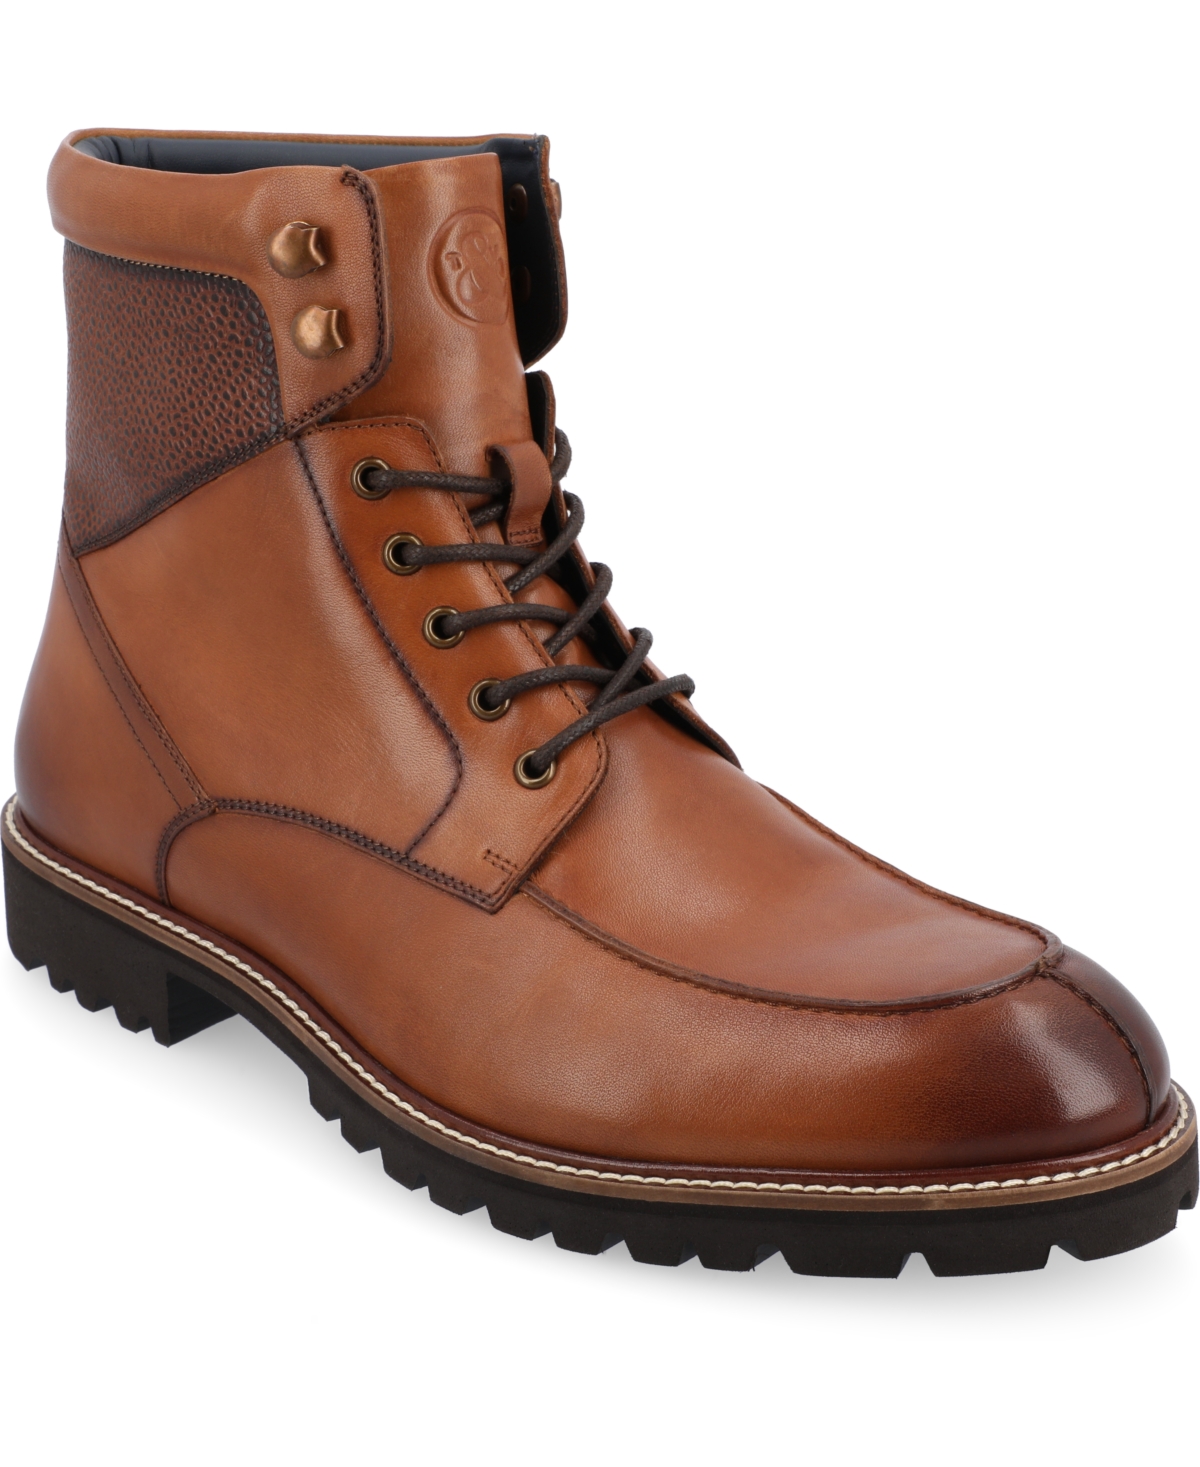 Men's Shaffer Tru Comfort Foam Moc Toe Ankle Boots - Cognac